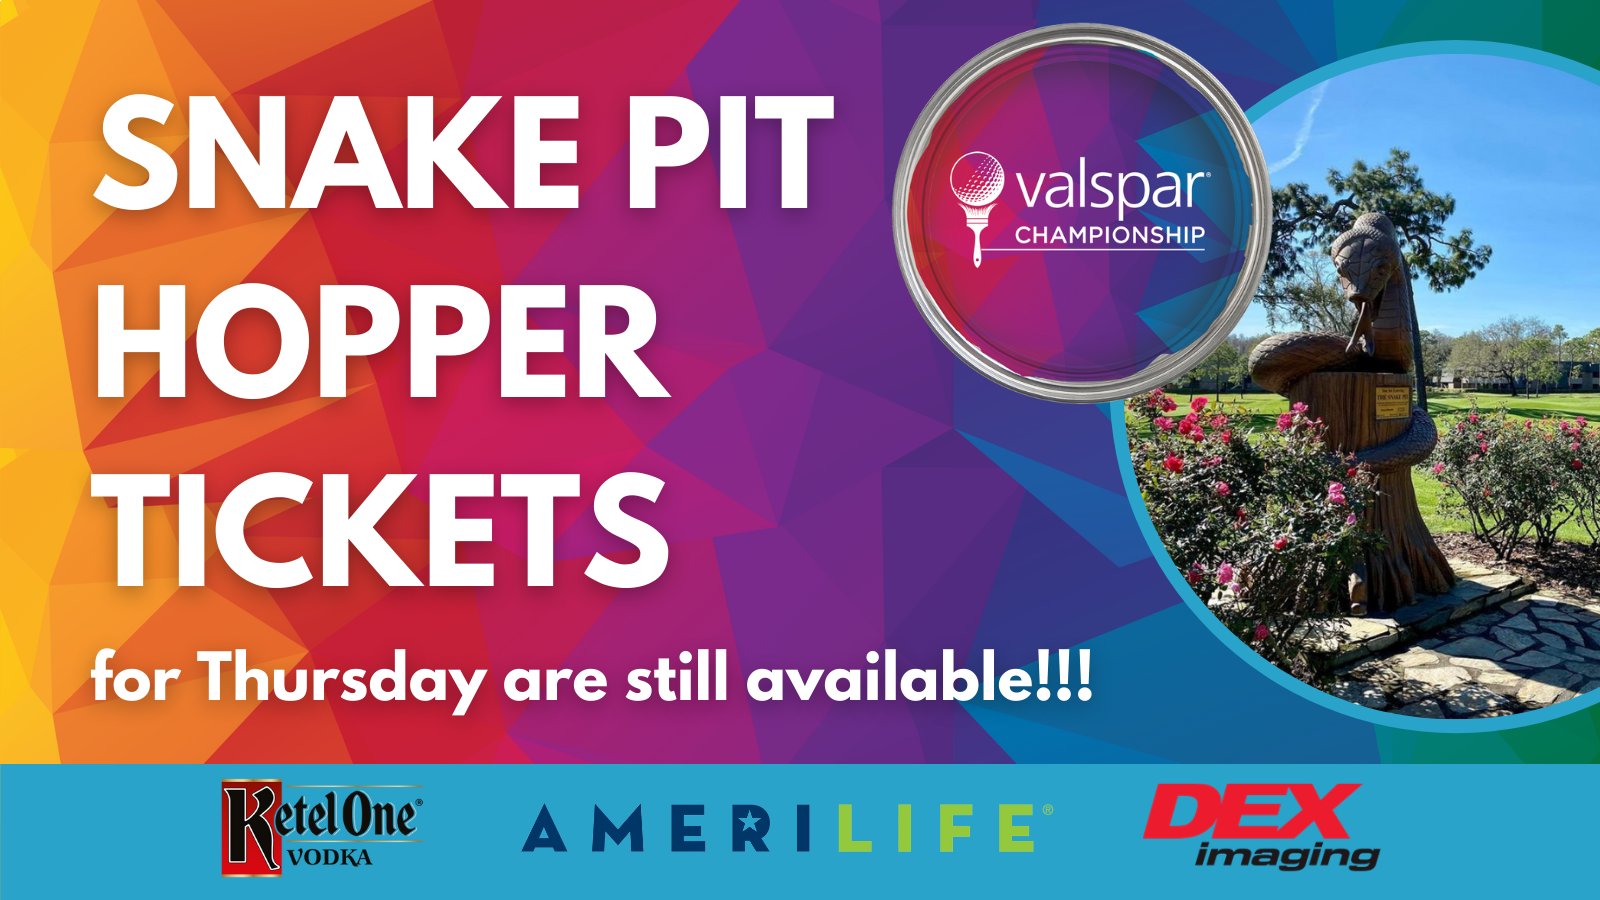 Valspar Championship on Twitter "Thursday Snake Pit Hopper tickets are